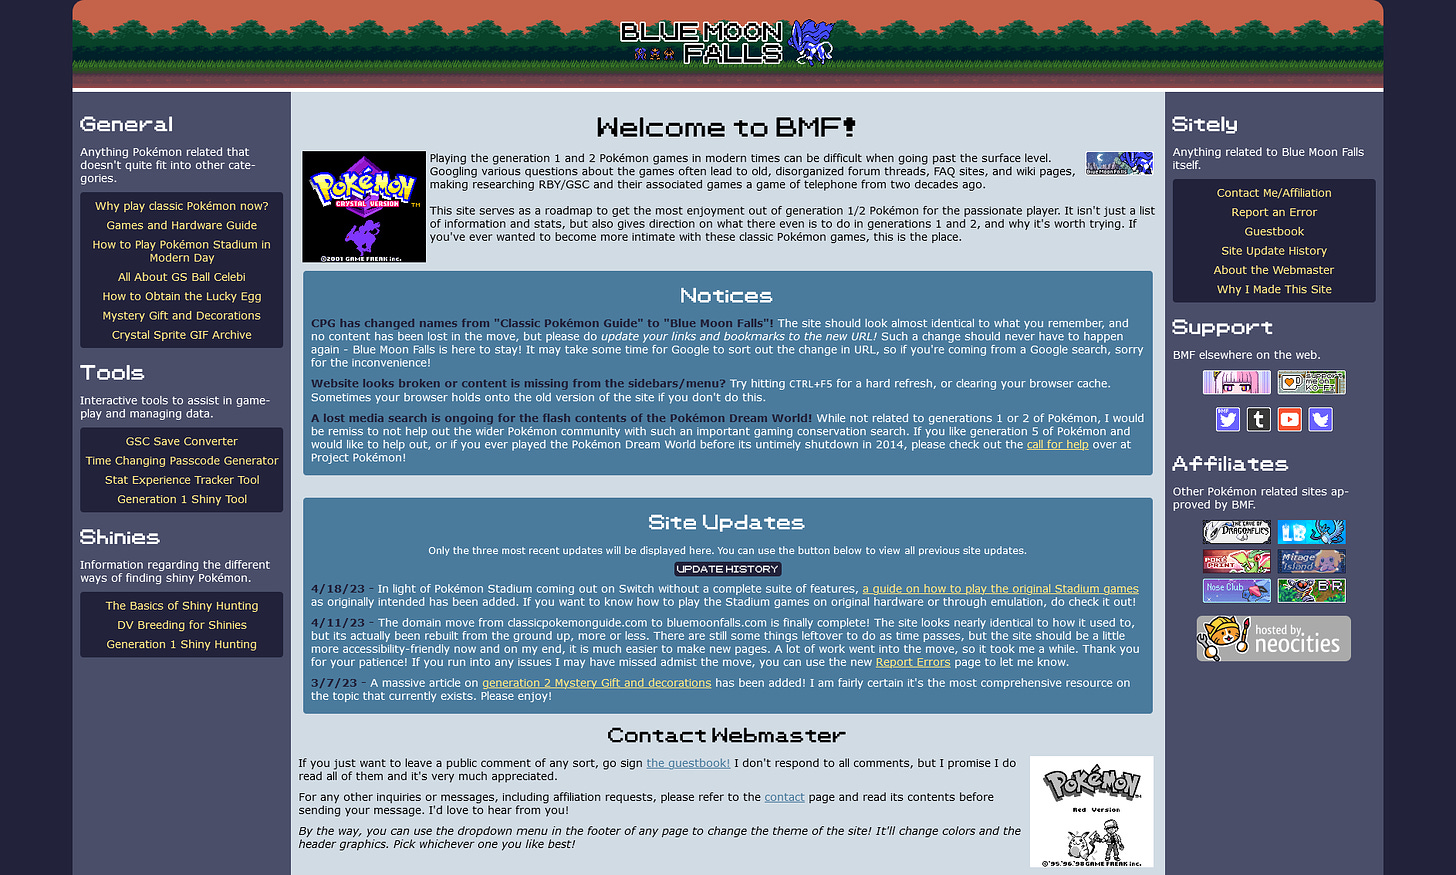 The Blue Moon Falls website, in June 2023